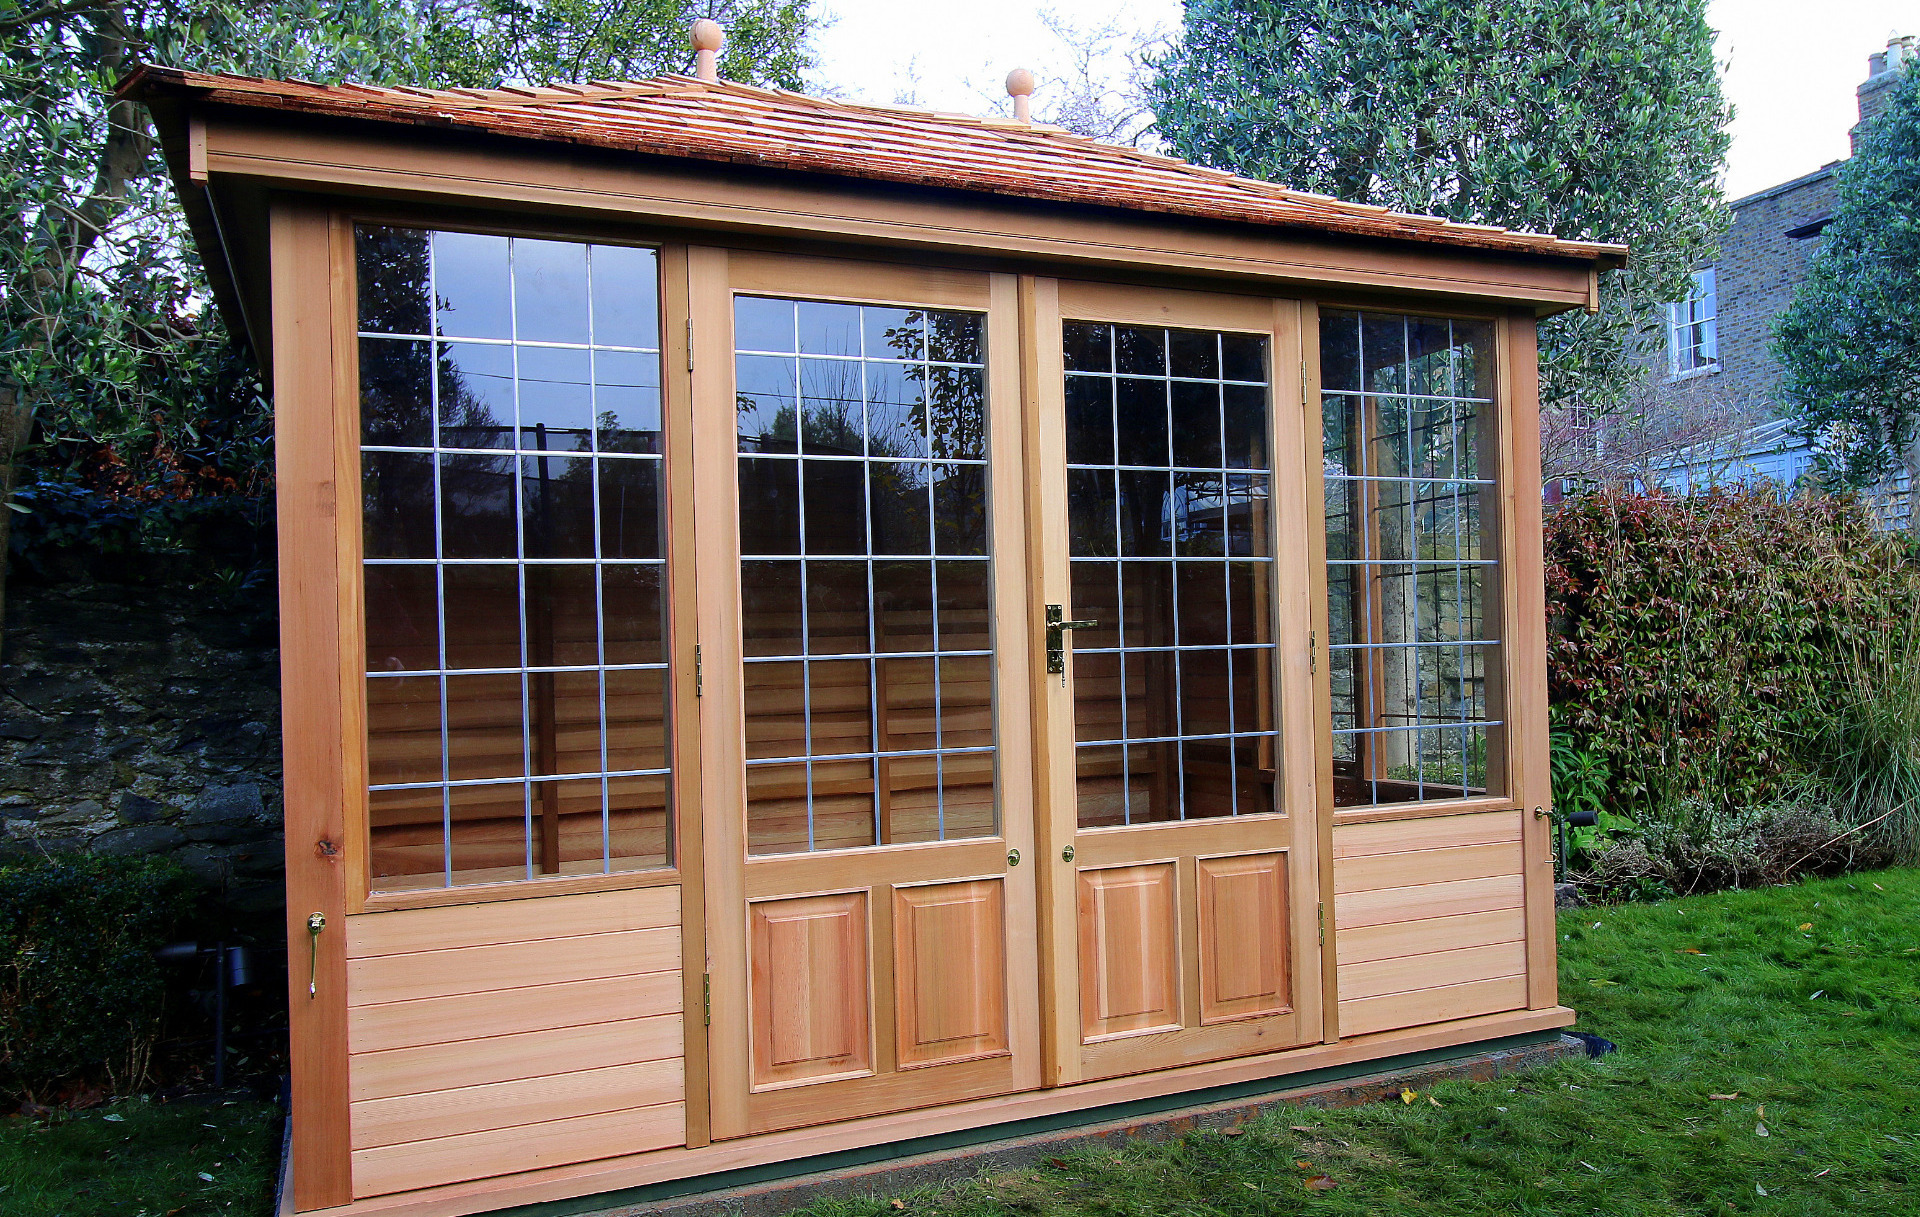 A 3.0m x 2.0m Wooden Summerhouse custom made in Western Red Cedar | Supplied + Fitted in Ballsbridge, Dublin 4. Tel 087-2306 128